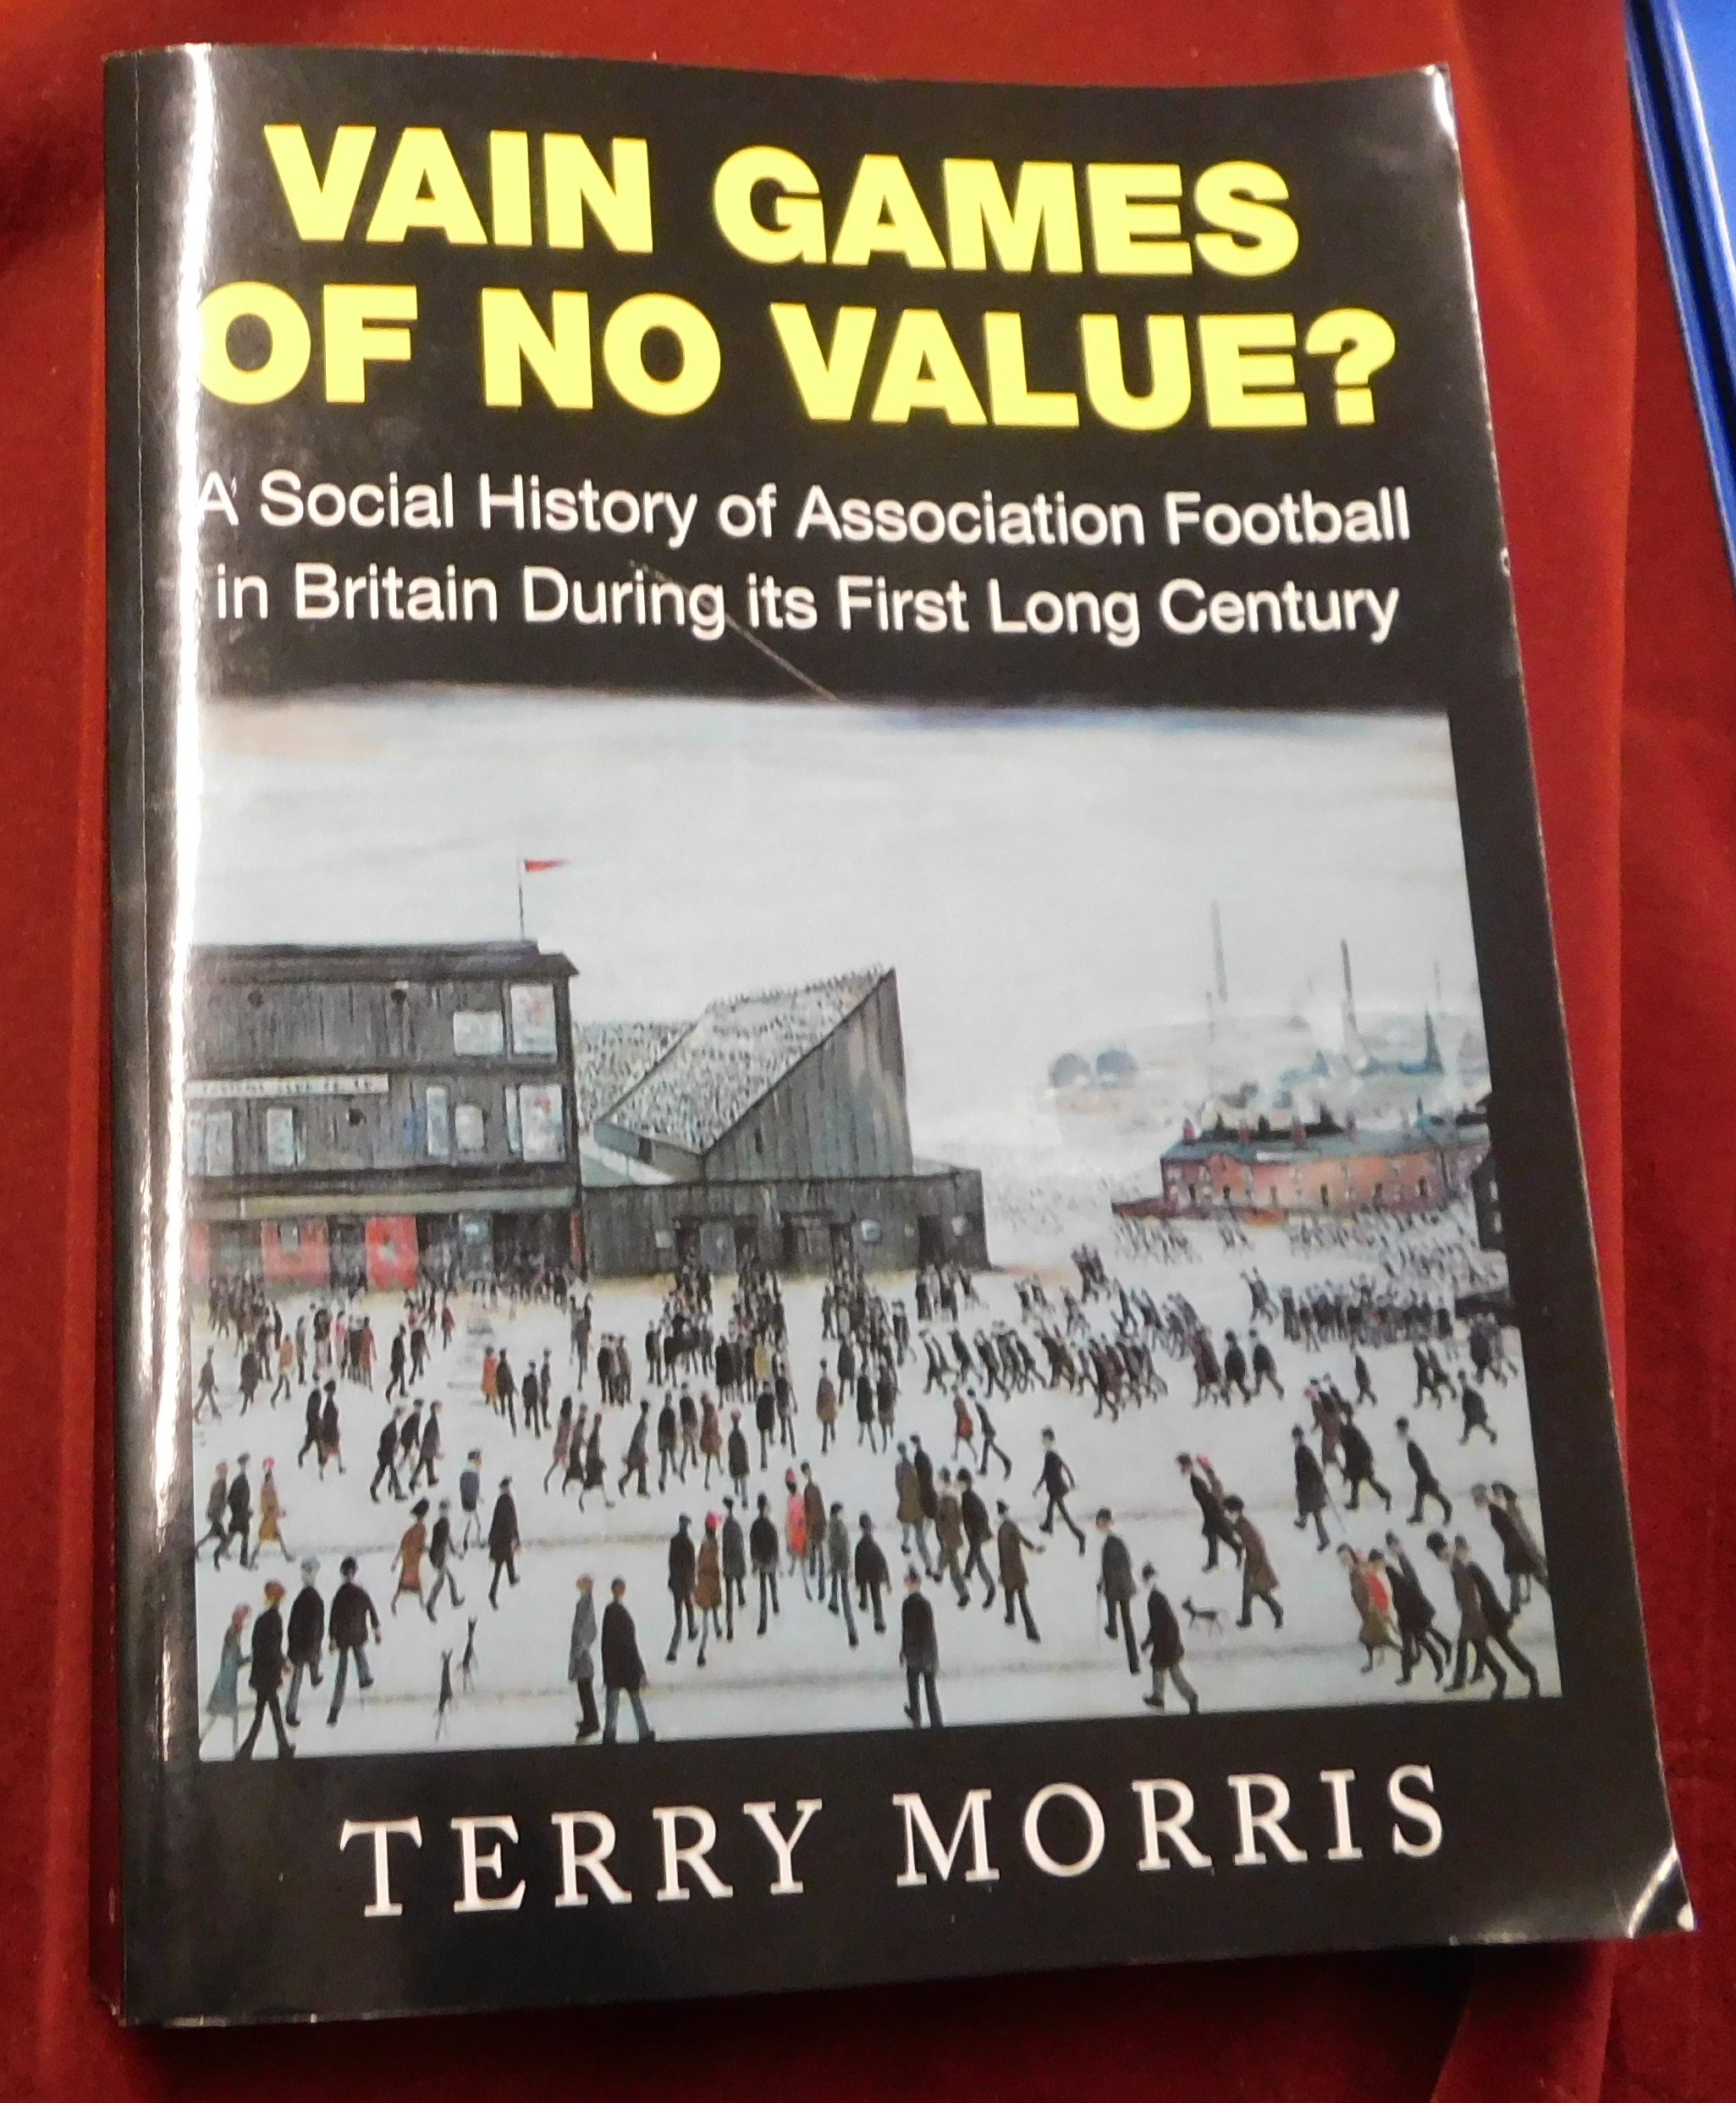 Football - 'Vain Games of No Value?' - A social history of Association Football in Britain' dating